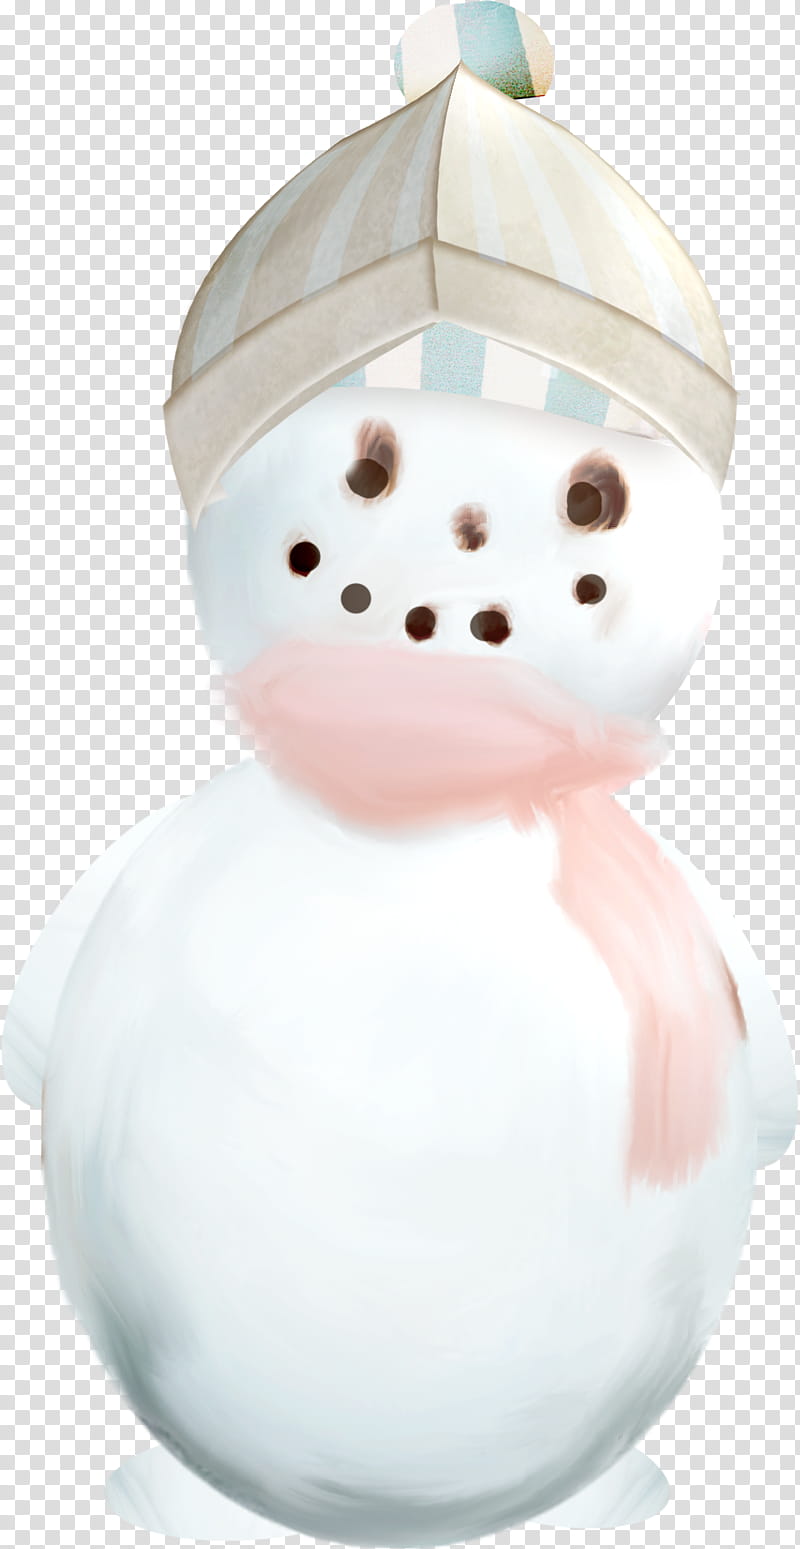 Christmas Winter, Snowman, Winter
, Frames, Plugin, Color, Christmas Ornament transparent background PNG clipart